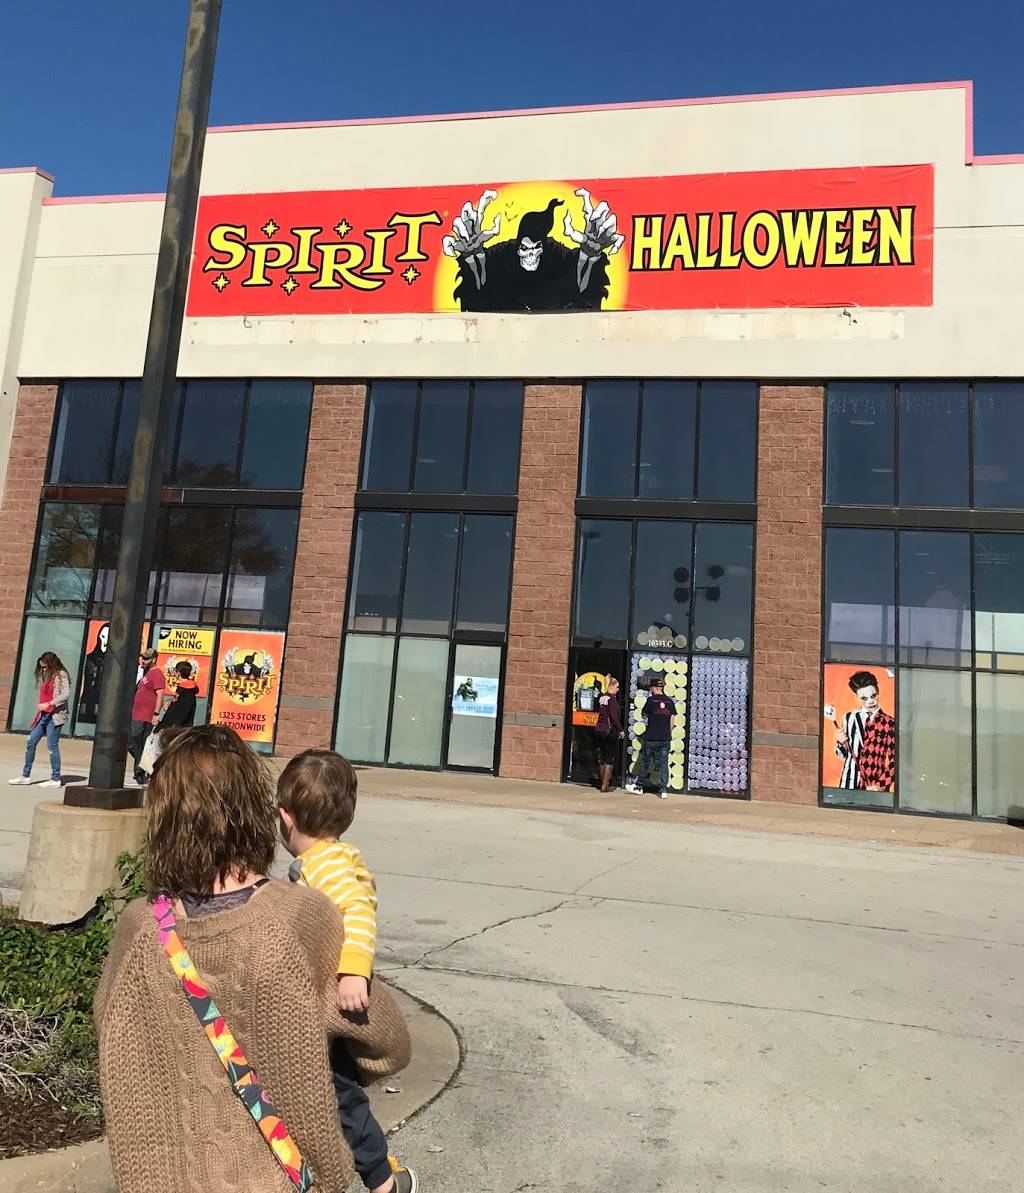 Spirit Halloween | Photo 1 of 9 | Address: 10303C E 71st St, Tulsa, OK 74133, USA | Phone: (866) 586-0155